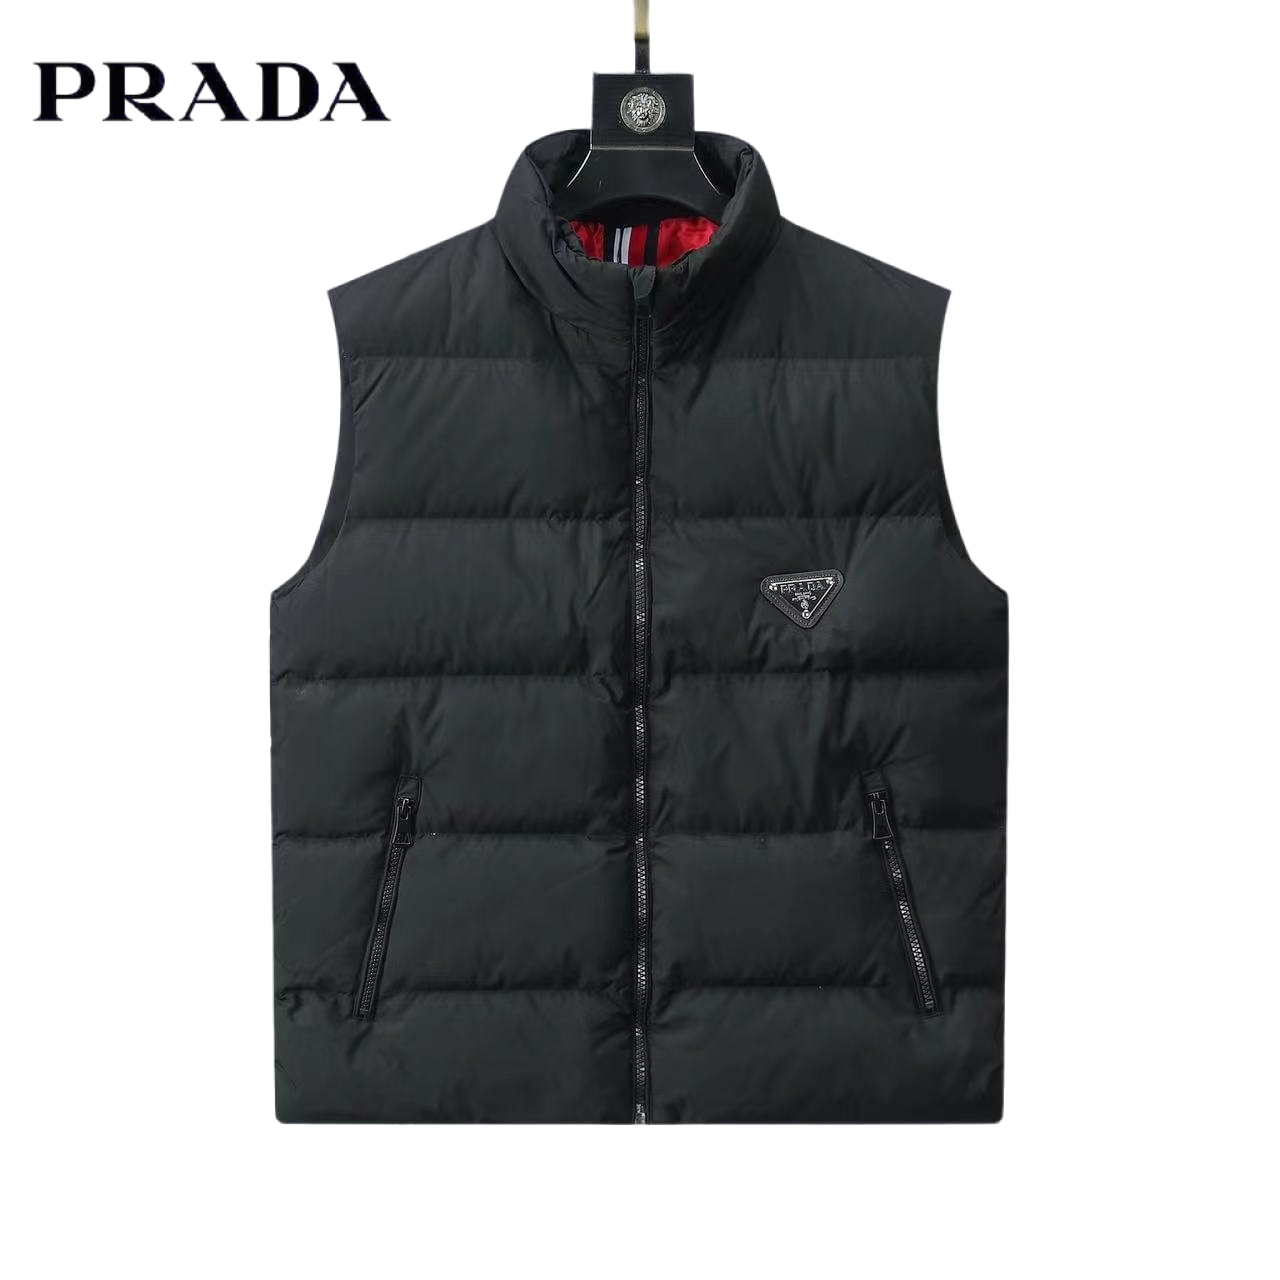 Buy Cheap Prada Sale Clothing Down Jacket Black White Duck Down Fall/Winter Collection Fashion